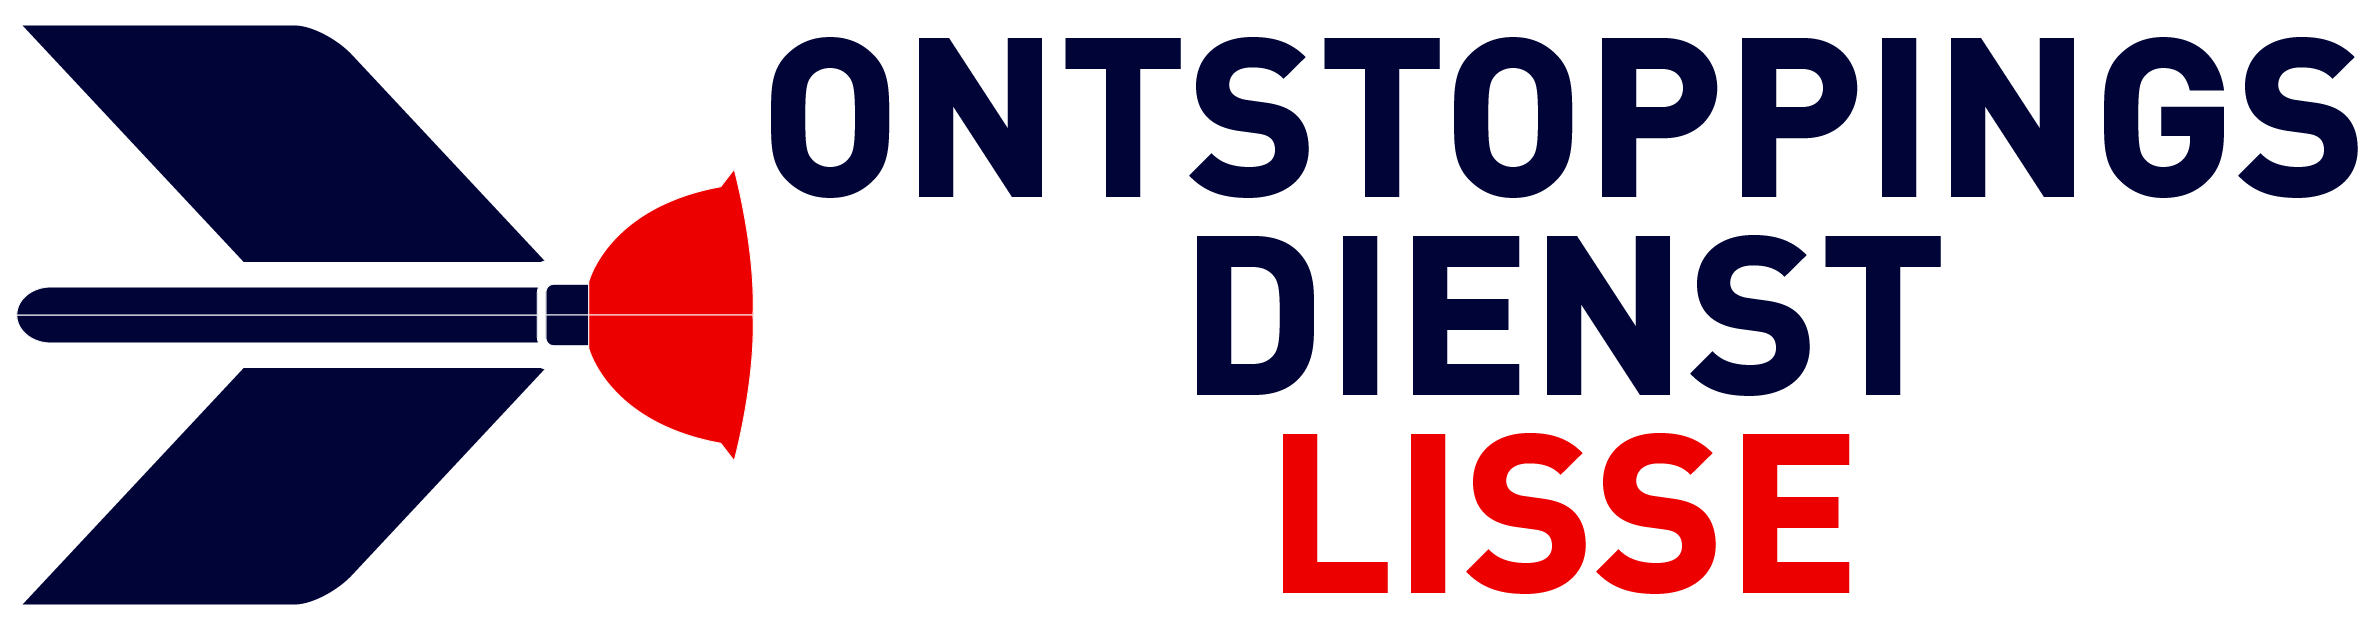 Ontstoppingsdienst Lisse logo